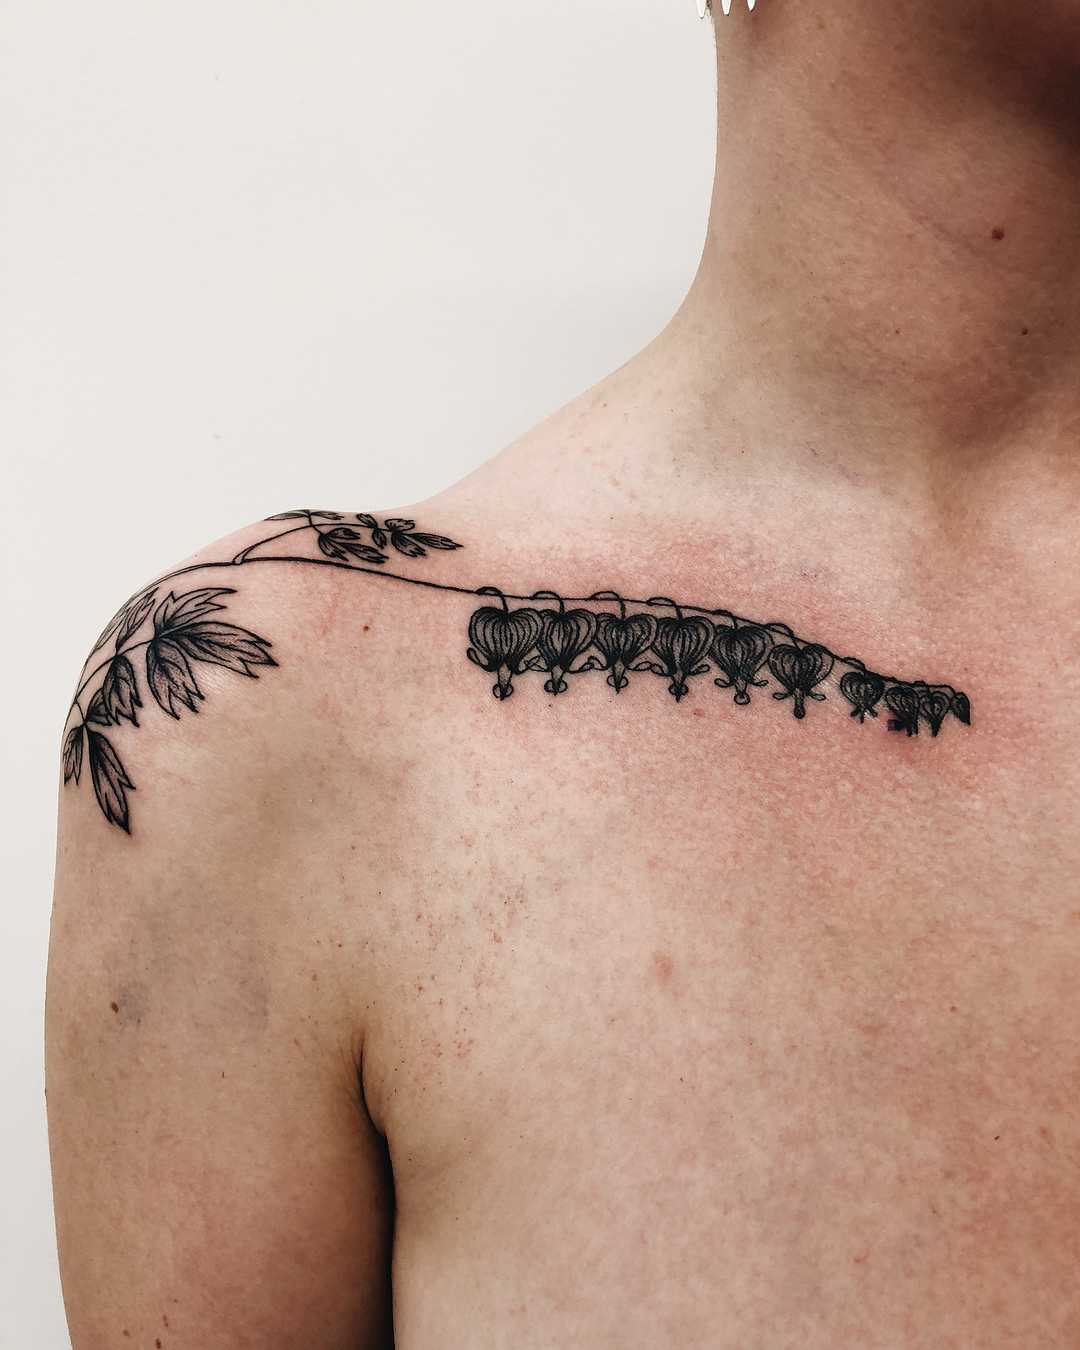 Collar Bone Name Tattoo Ideas